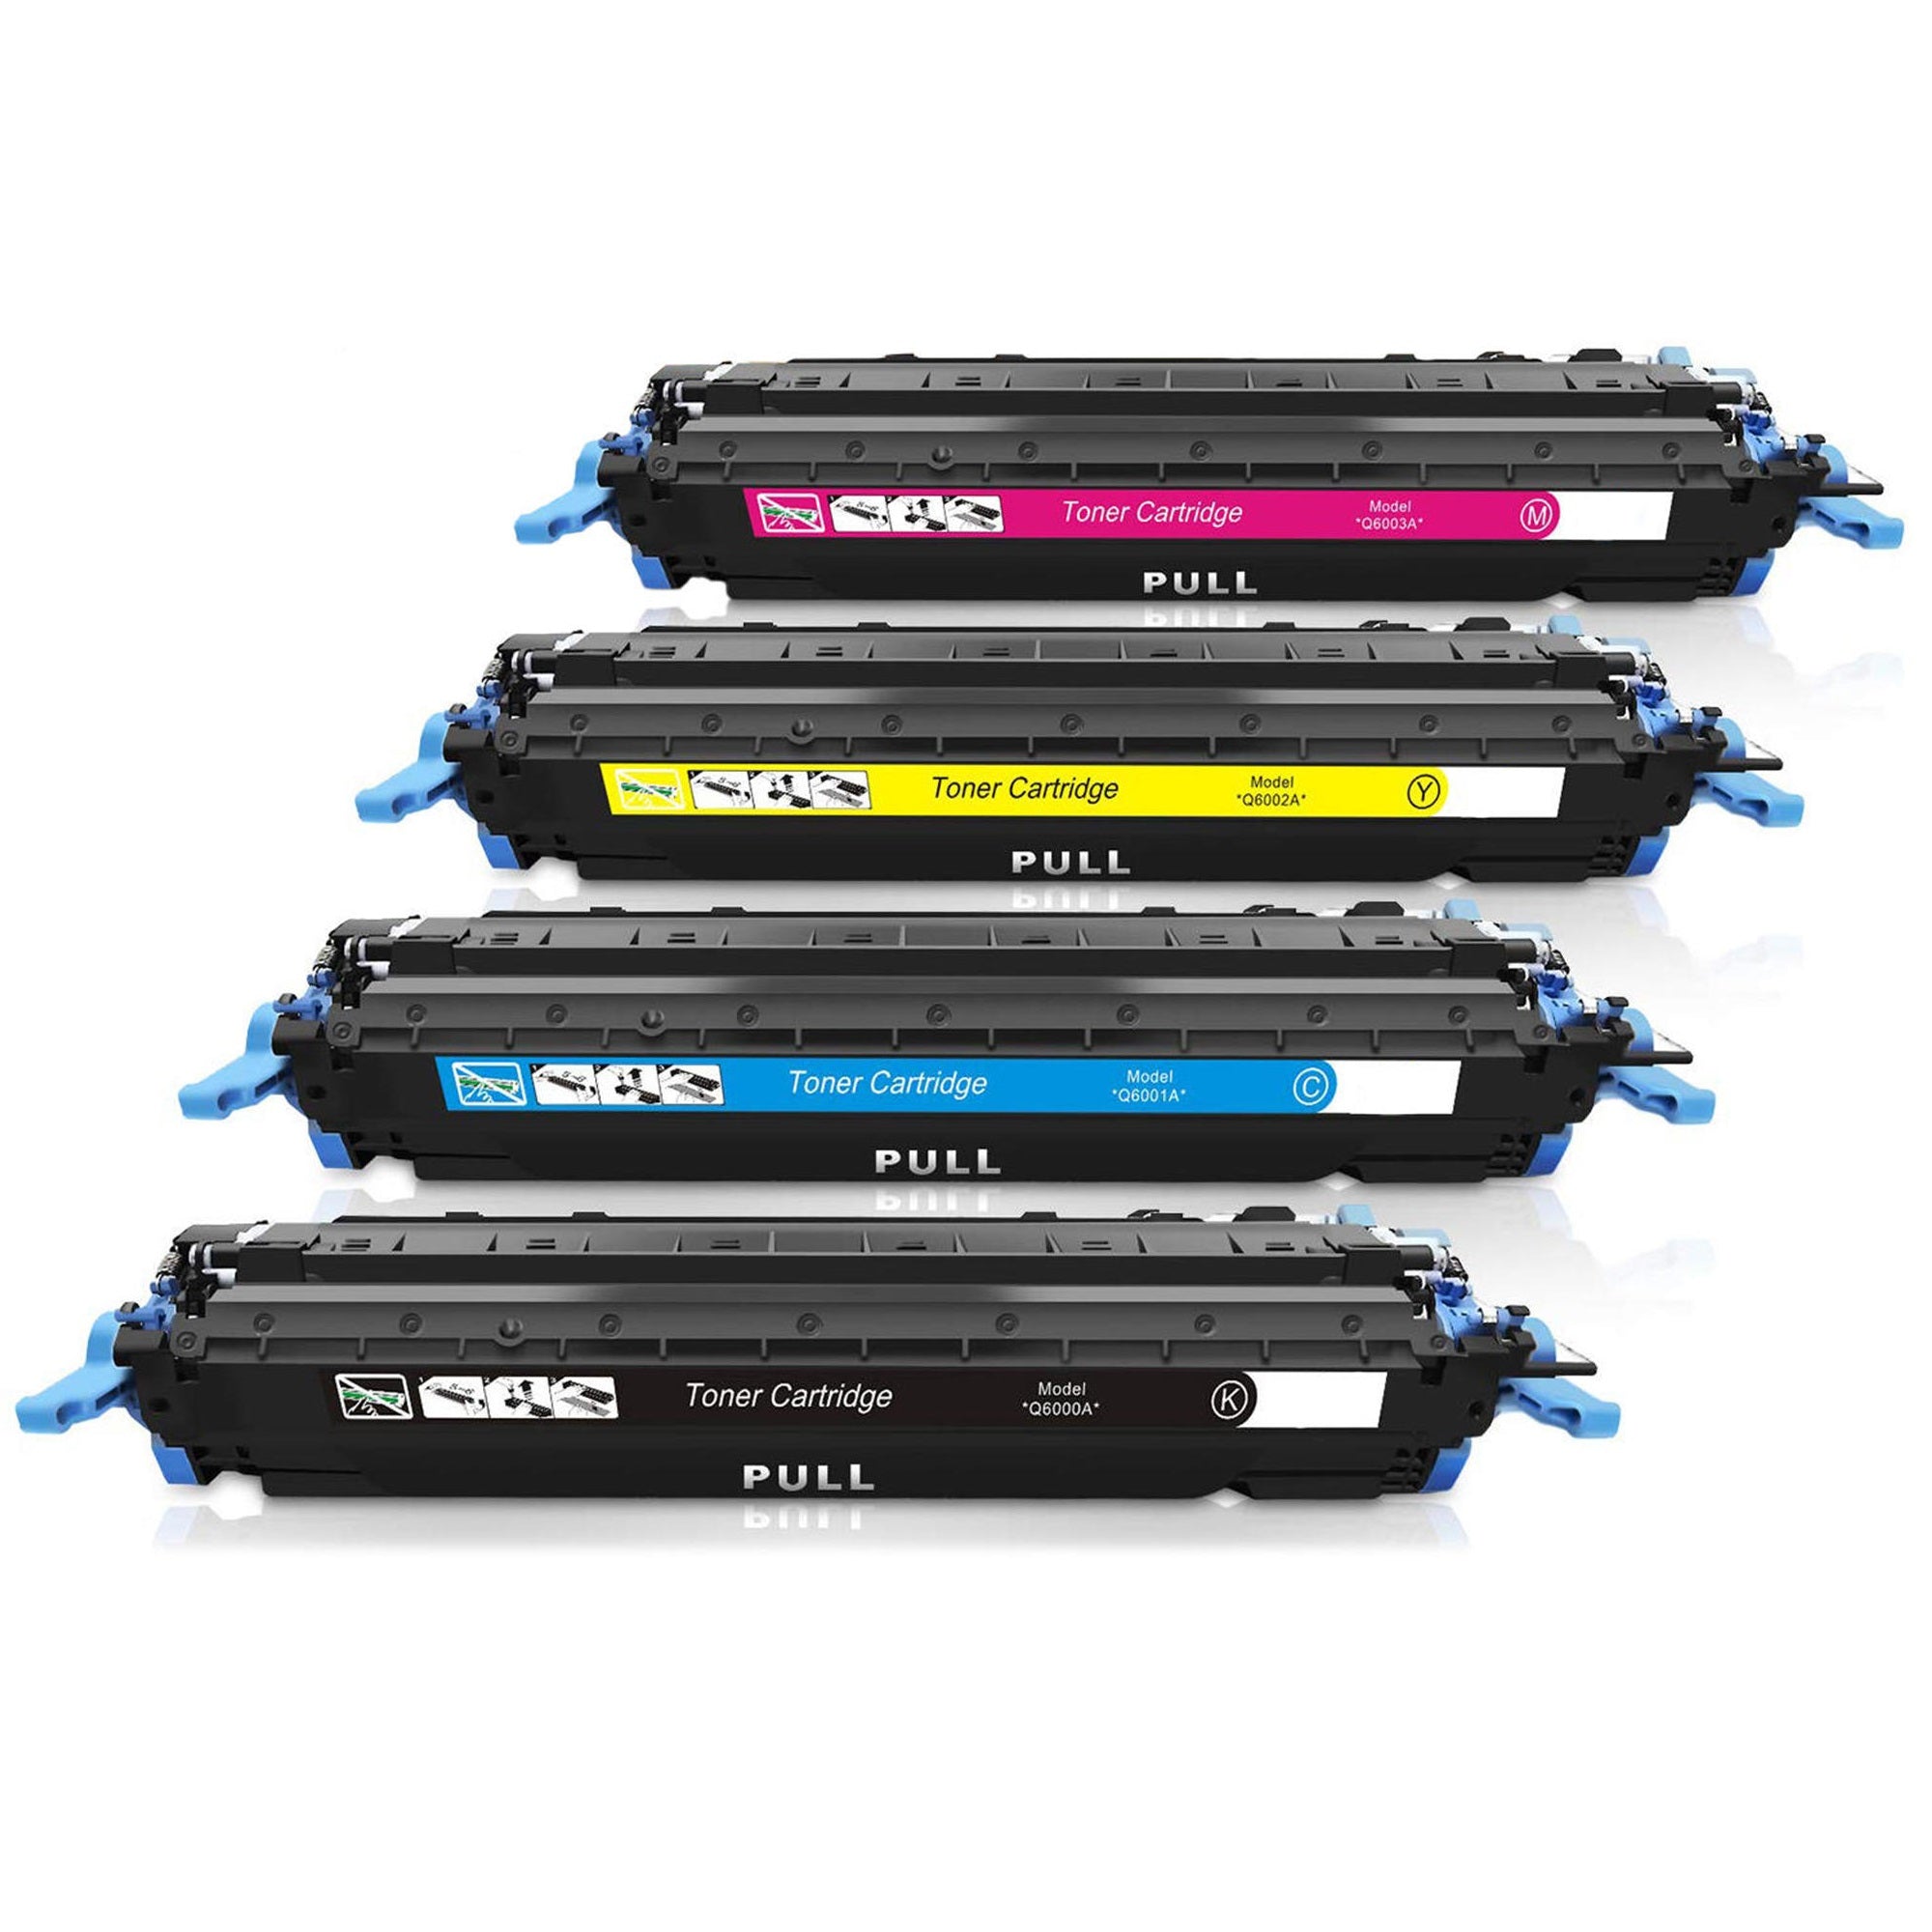 Absolute Toner AbsoluteToner Toner Laser Cartridge Compatible With HP 124A (Black/Cyan/Magenta/Yellow) Color Combo HP Toner Cartridges